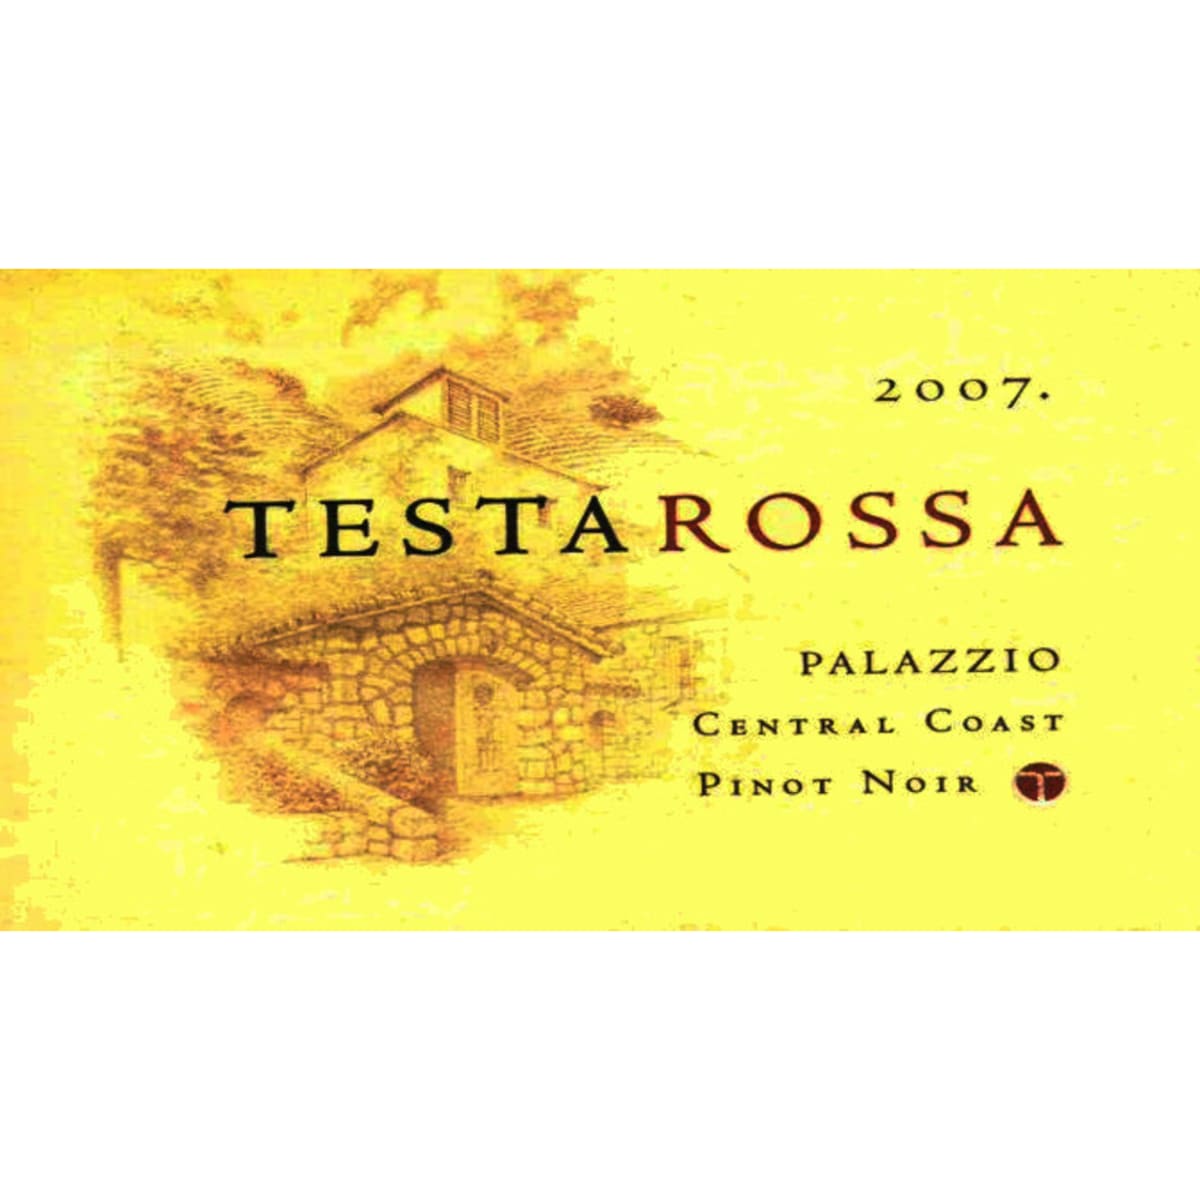 Testarossa Palazzio Pinot Noir 2007 Front Label